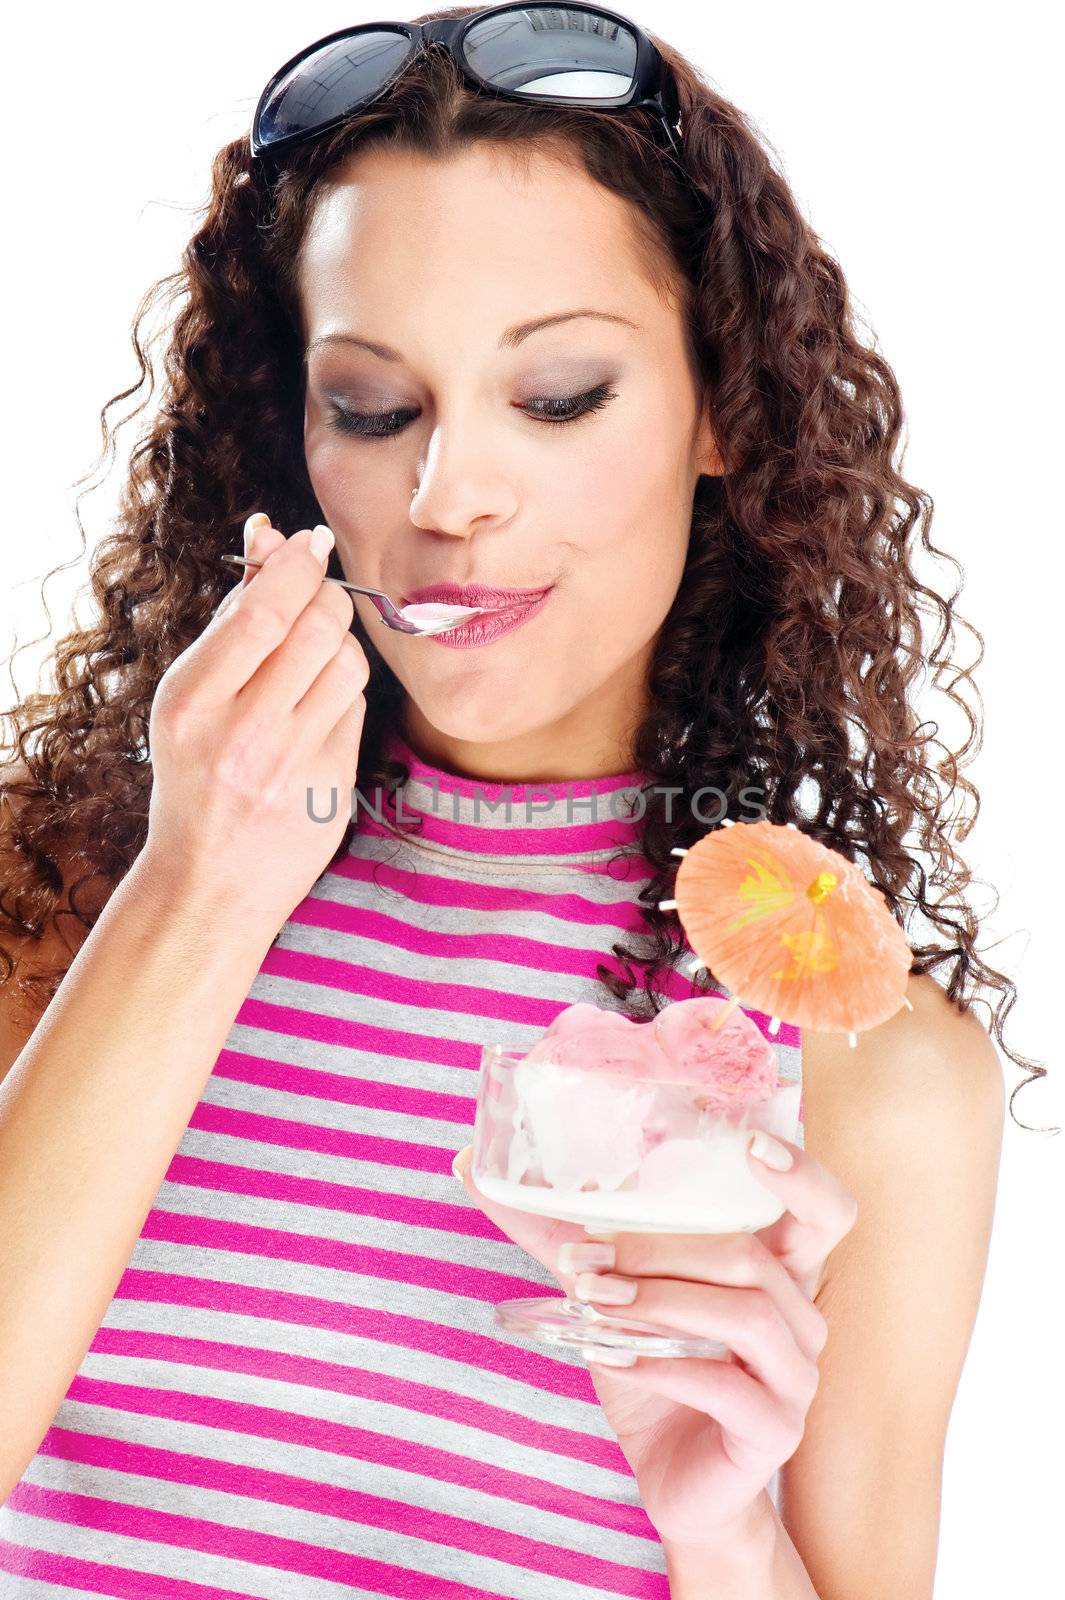 Woman eating icecream, isolated on white background